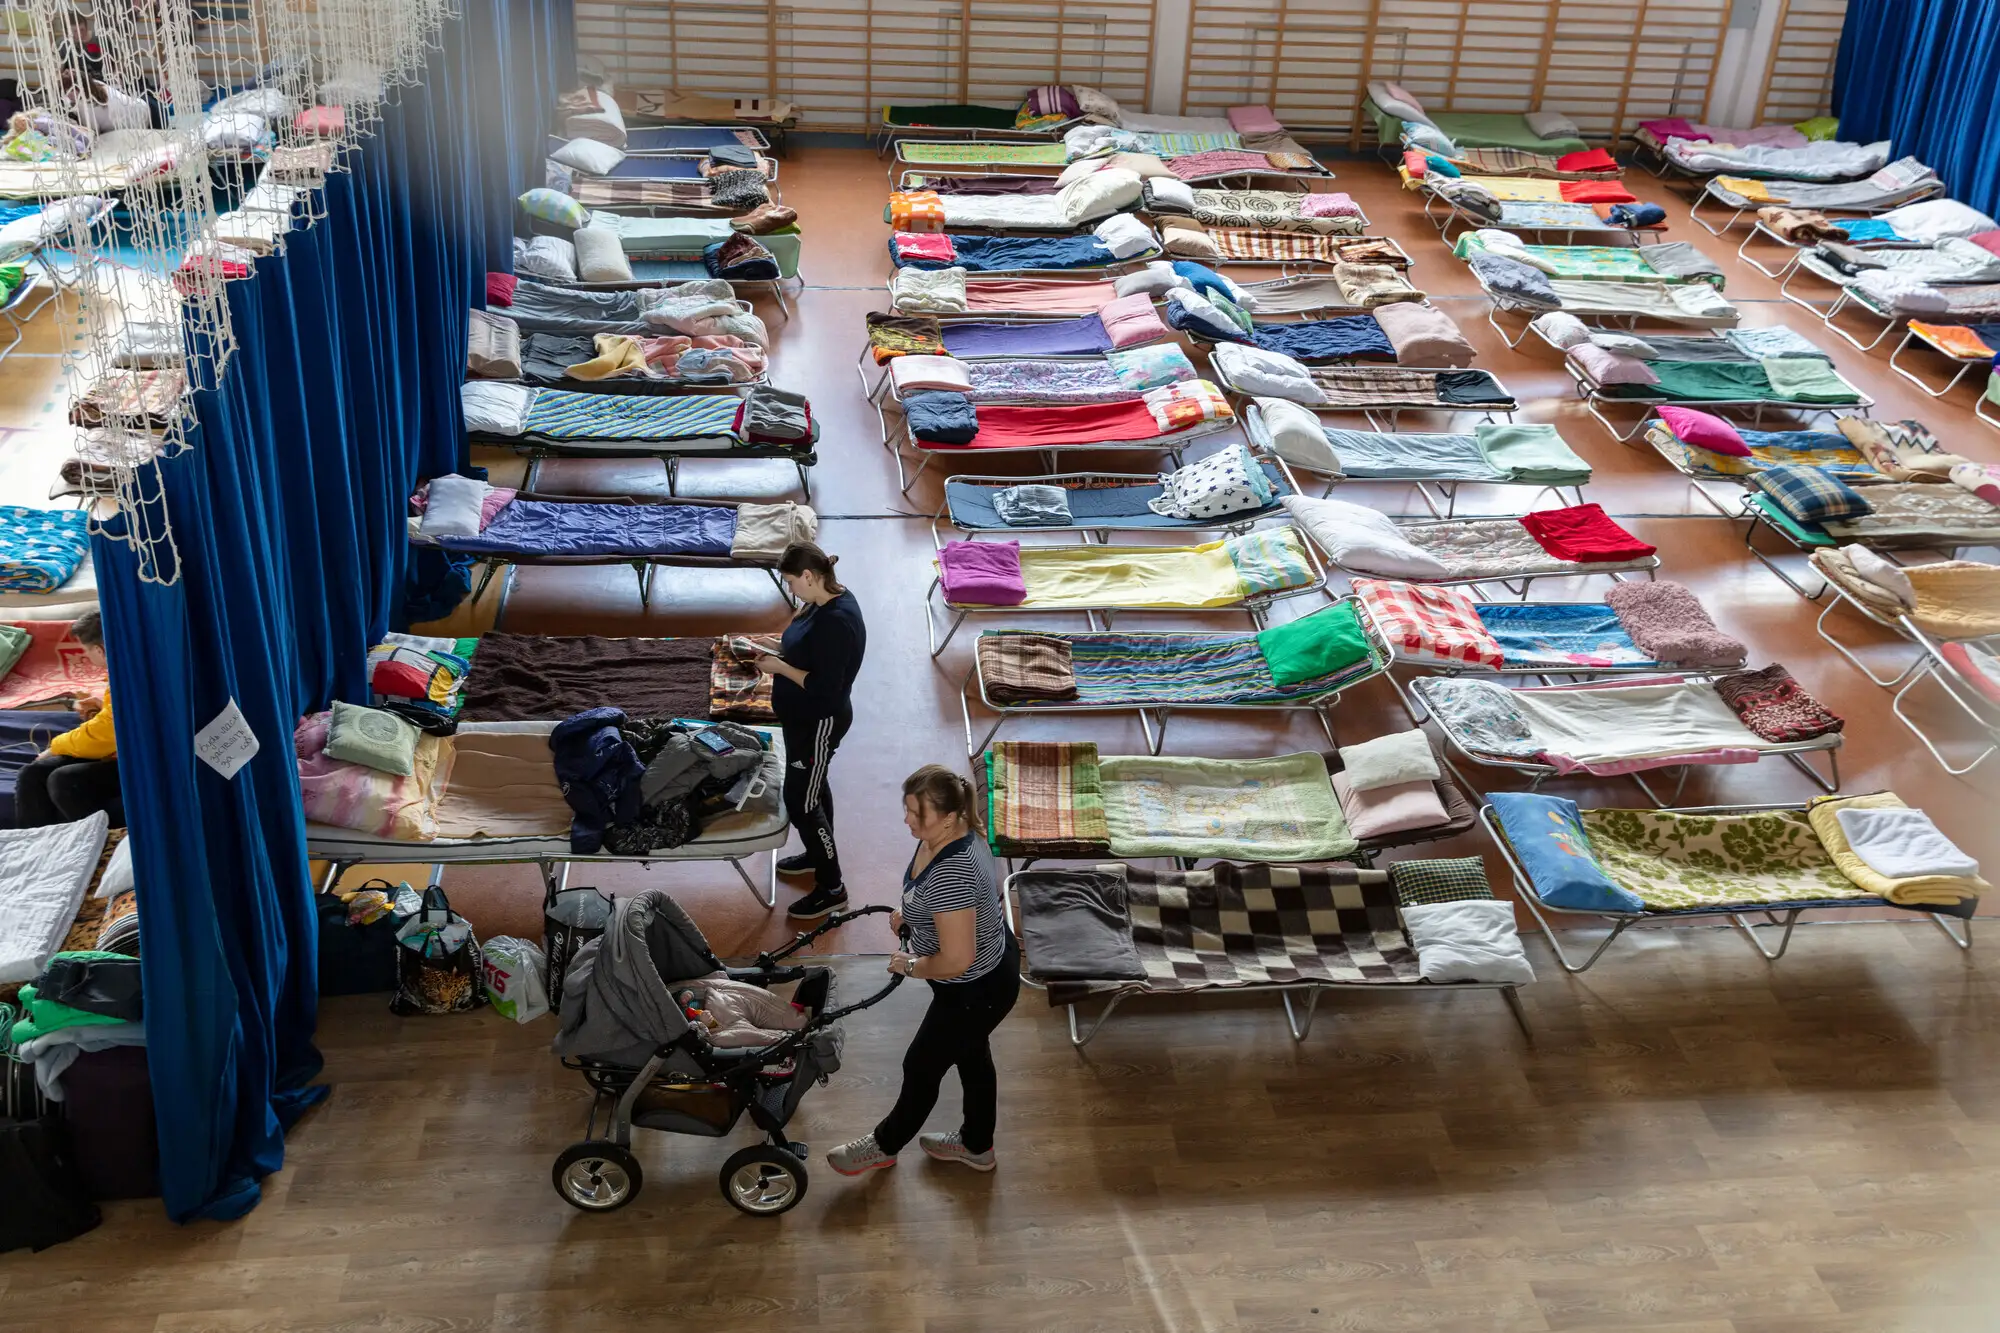 A school gym, Hala Sportowa, Lubycza Królewska, serves as temporary housing for refugees in the Polish border town, Hrebenne.